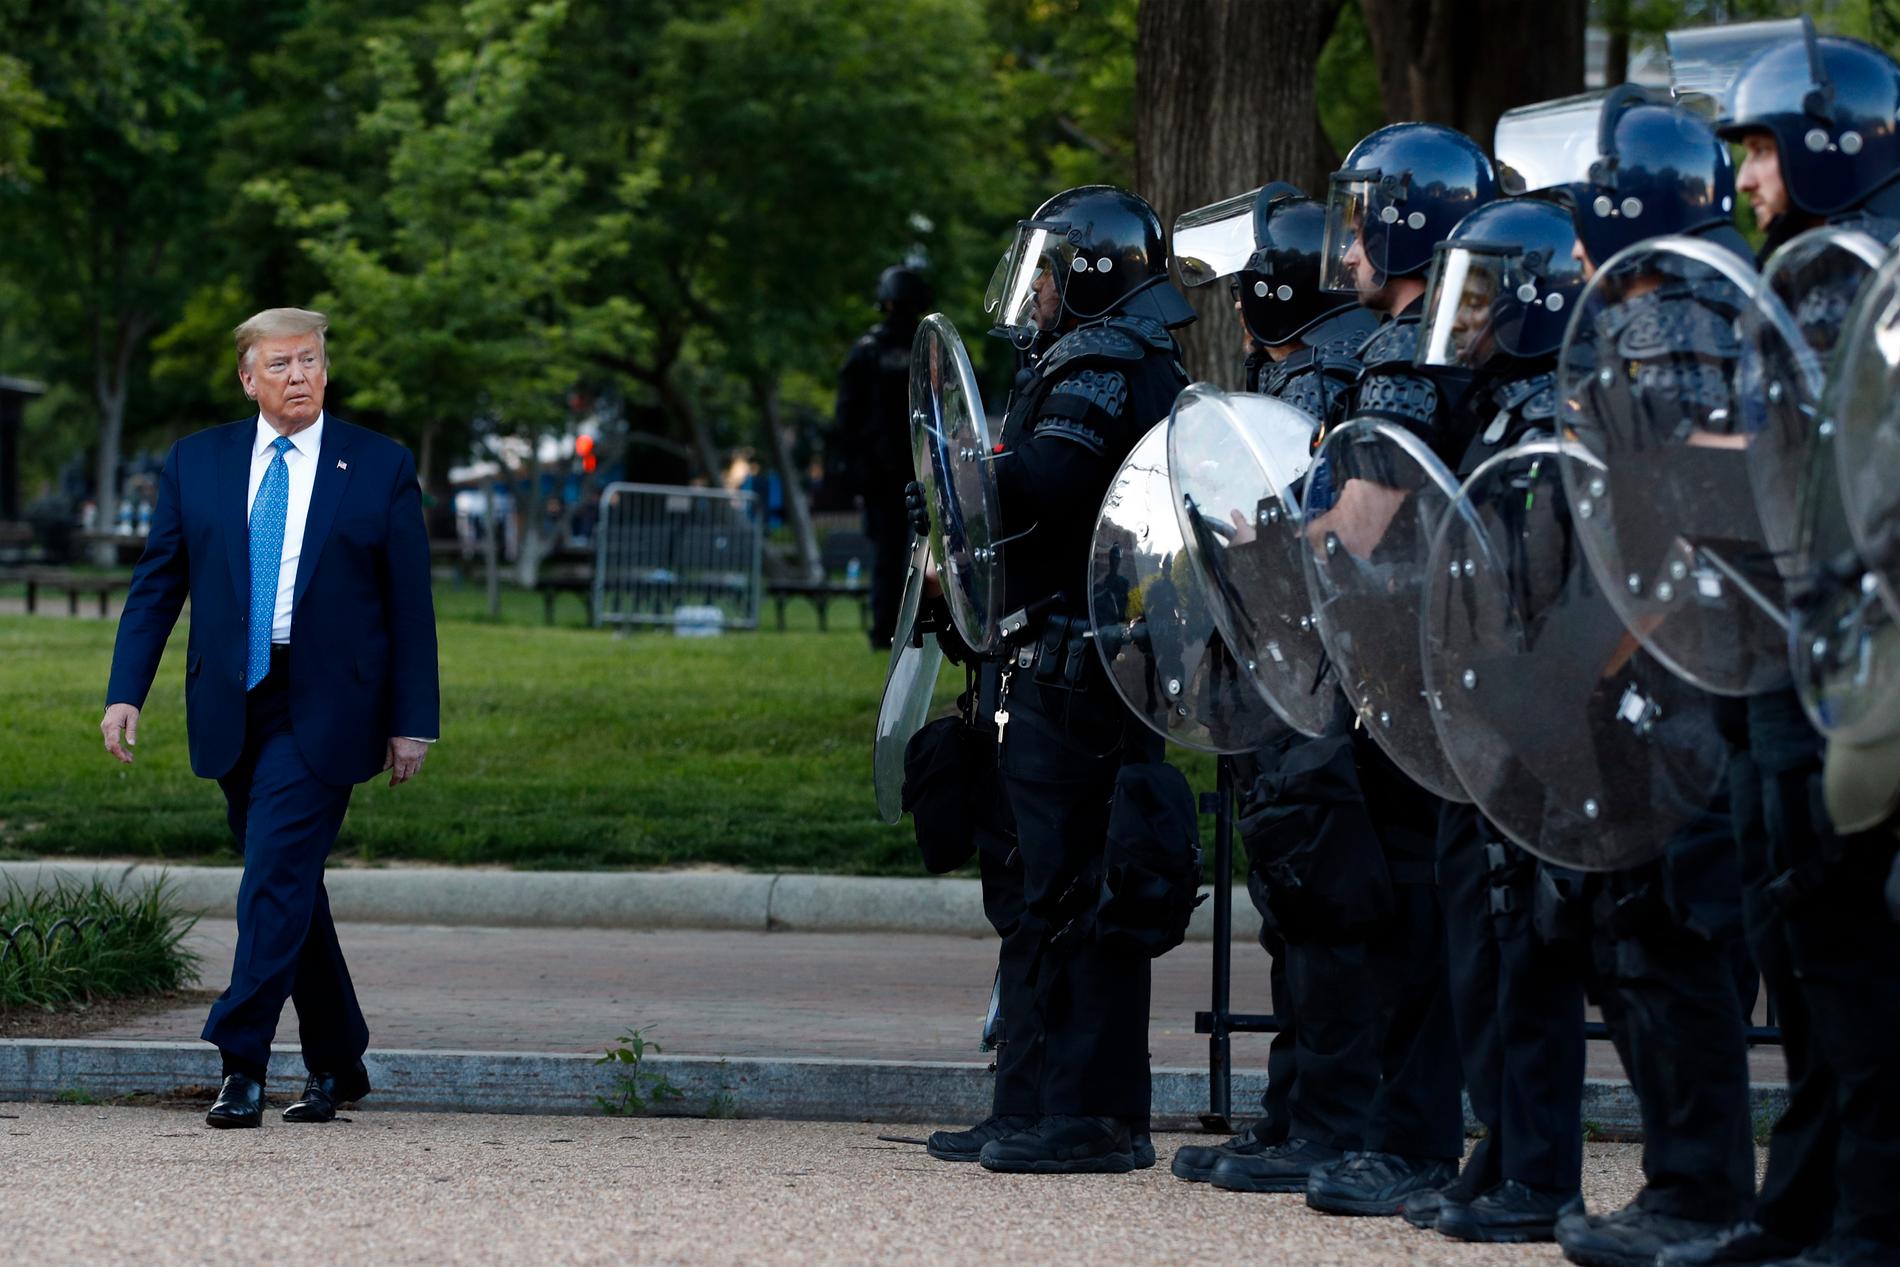 President Donald Trump passerar kravallutrustad polis i Lafayetteparken bredvid Vita huset.